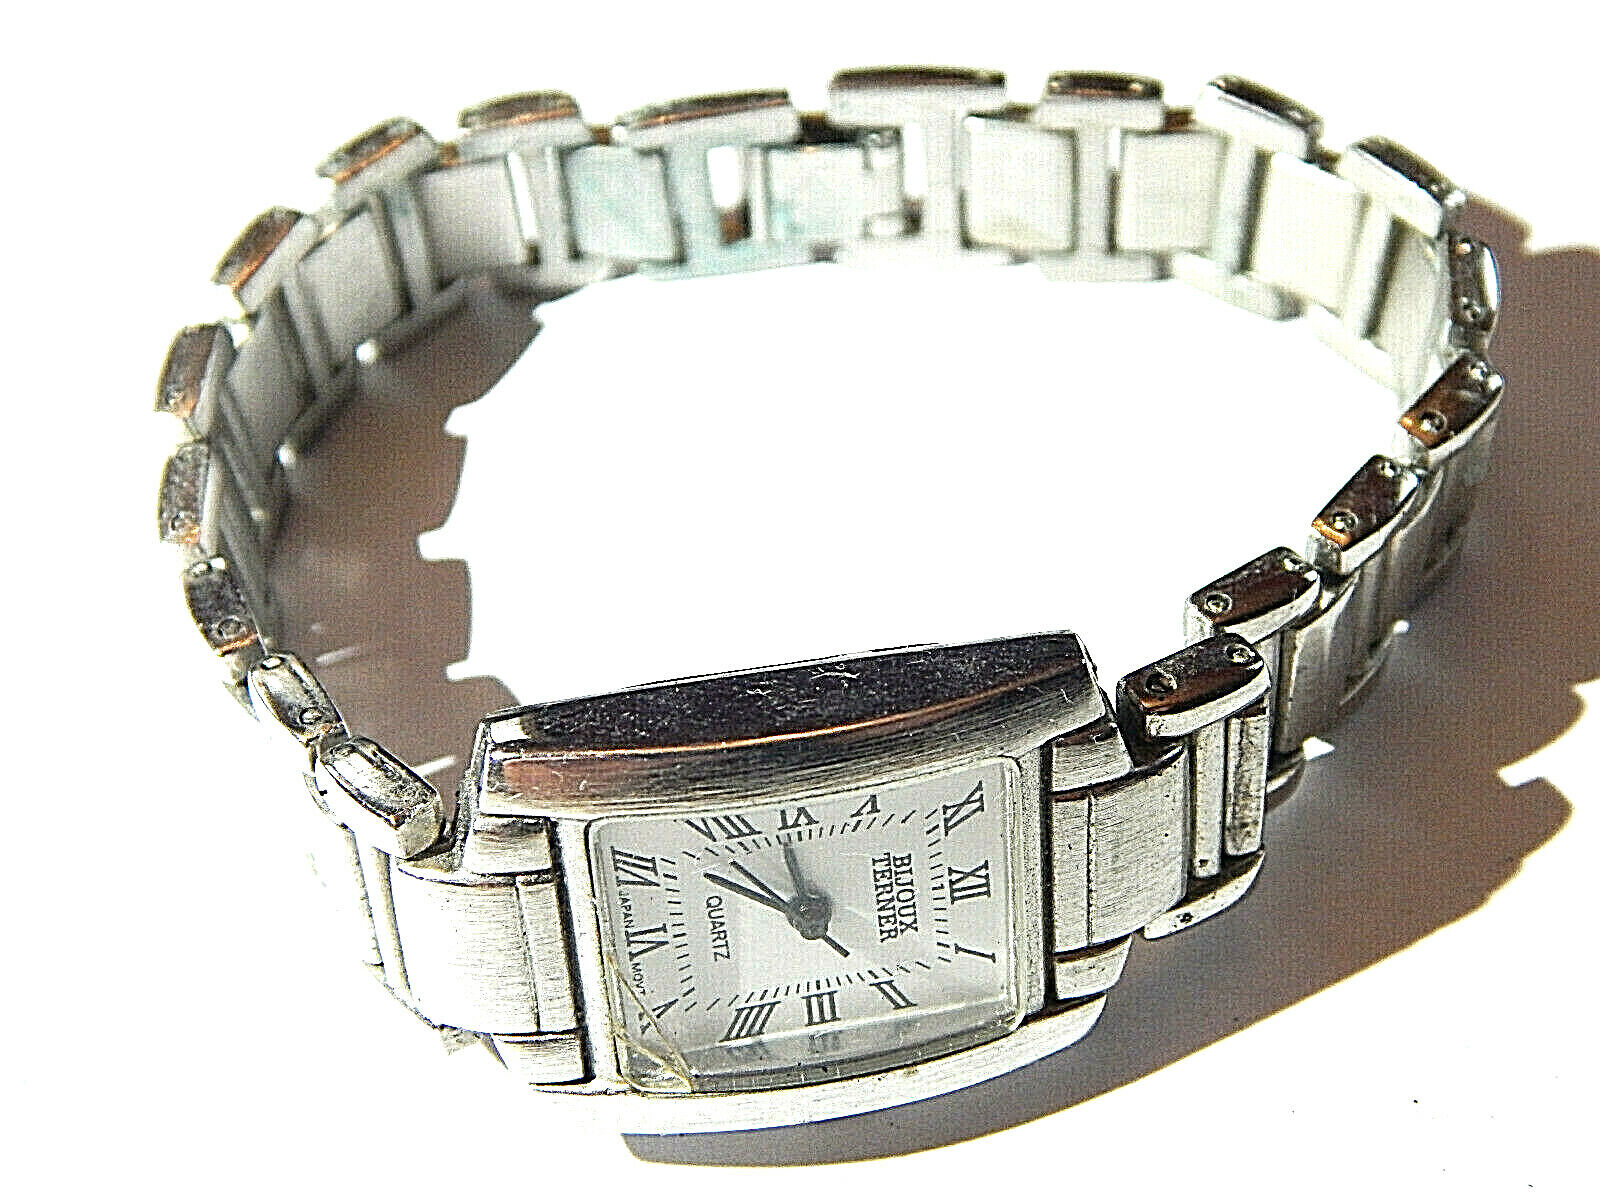 Bijoux Terner Watch Value Cheap Sale - www.edoc.com.vn 1695001017